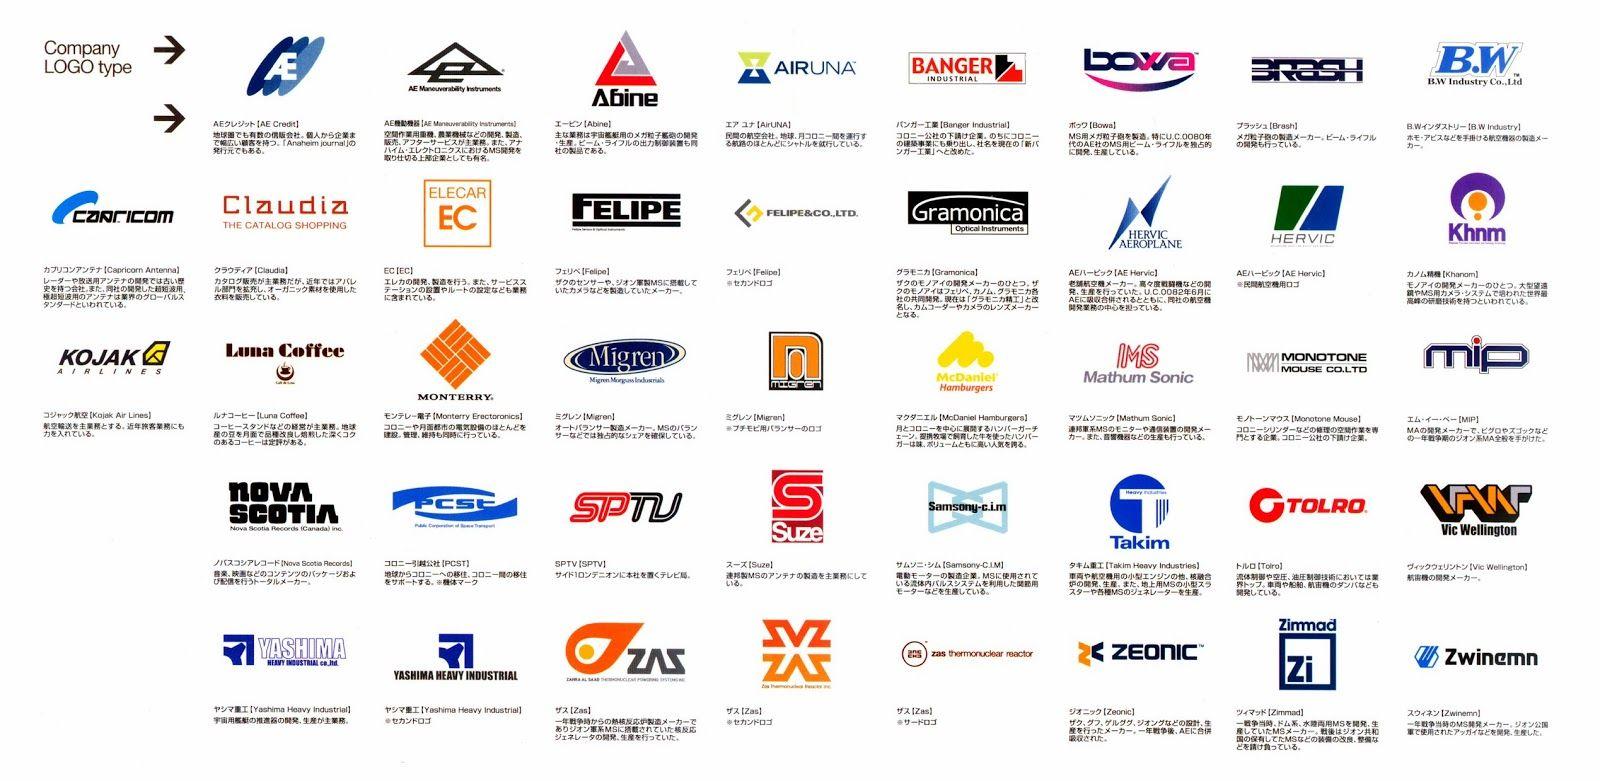 Automotive Company Logo - Companies Logos Car Center